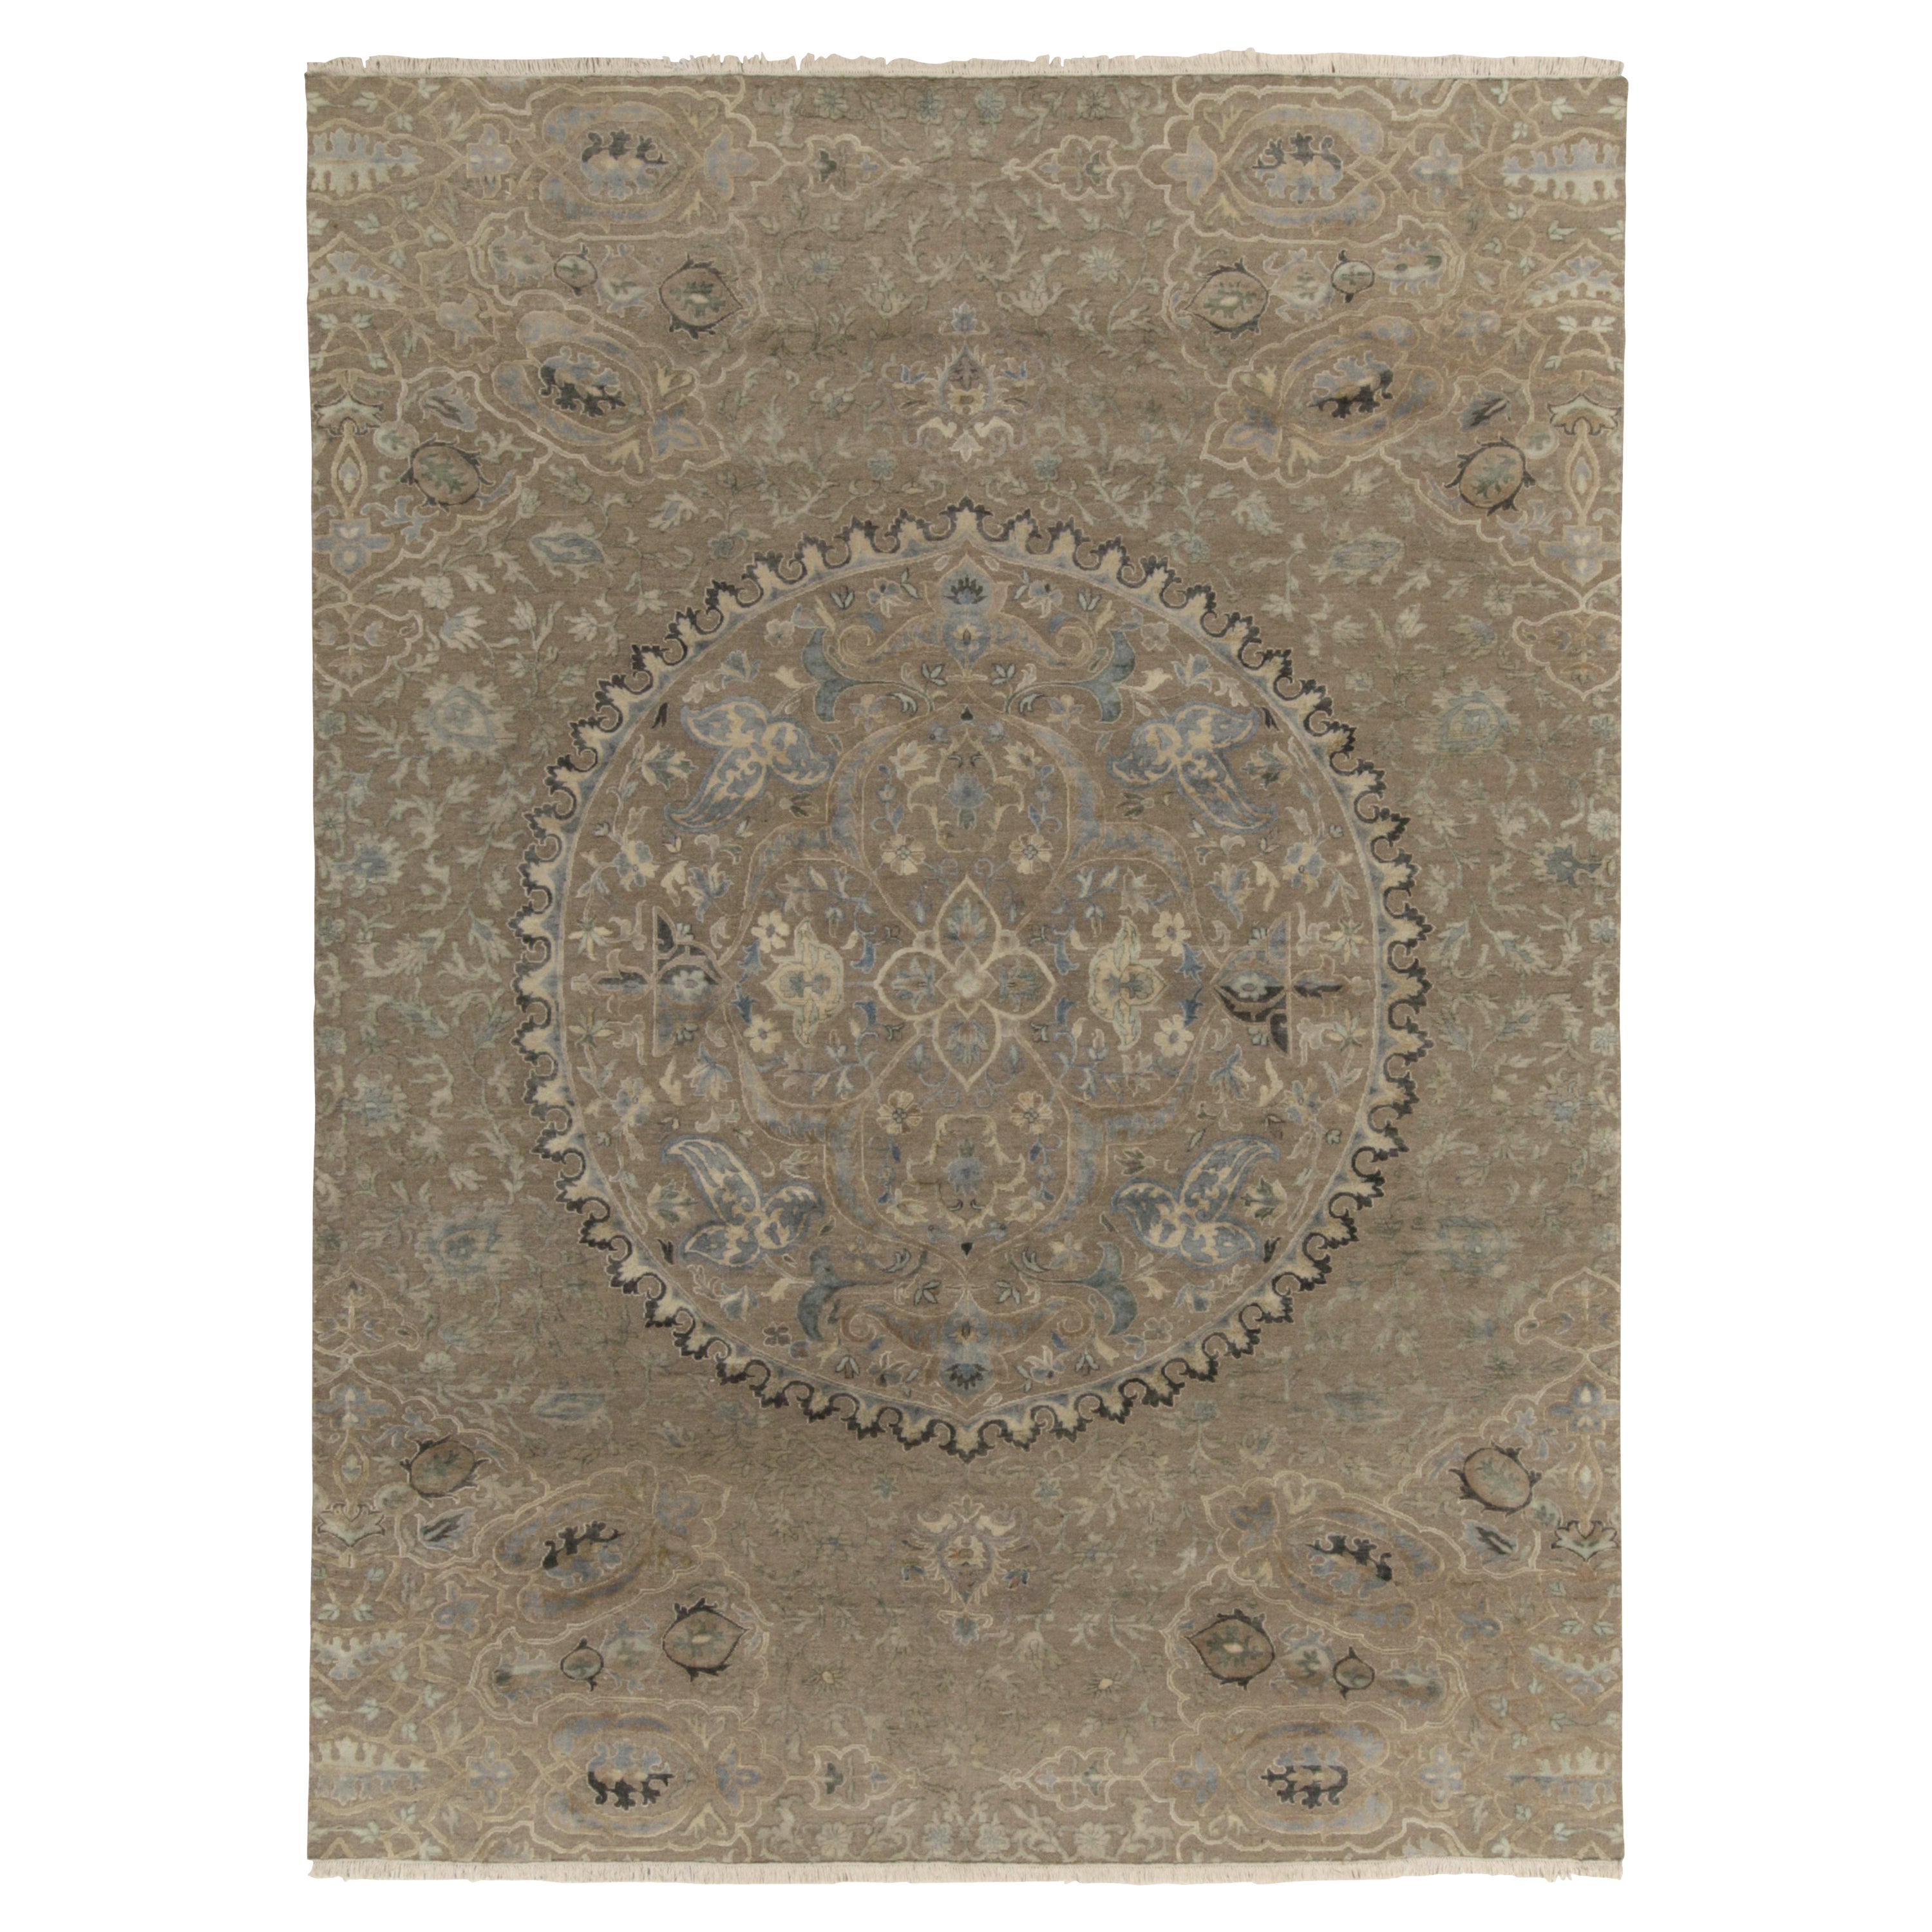 Rug & Kilims Classic-Teppich in Beige, Grau und Blau mit floralem Medaillon-Muster